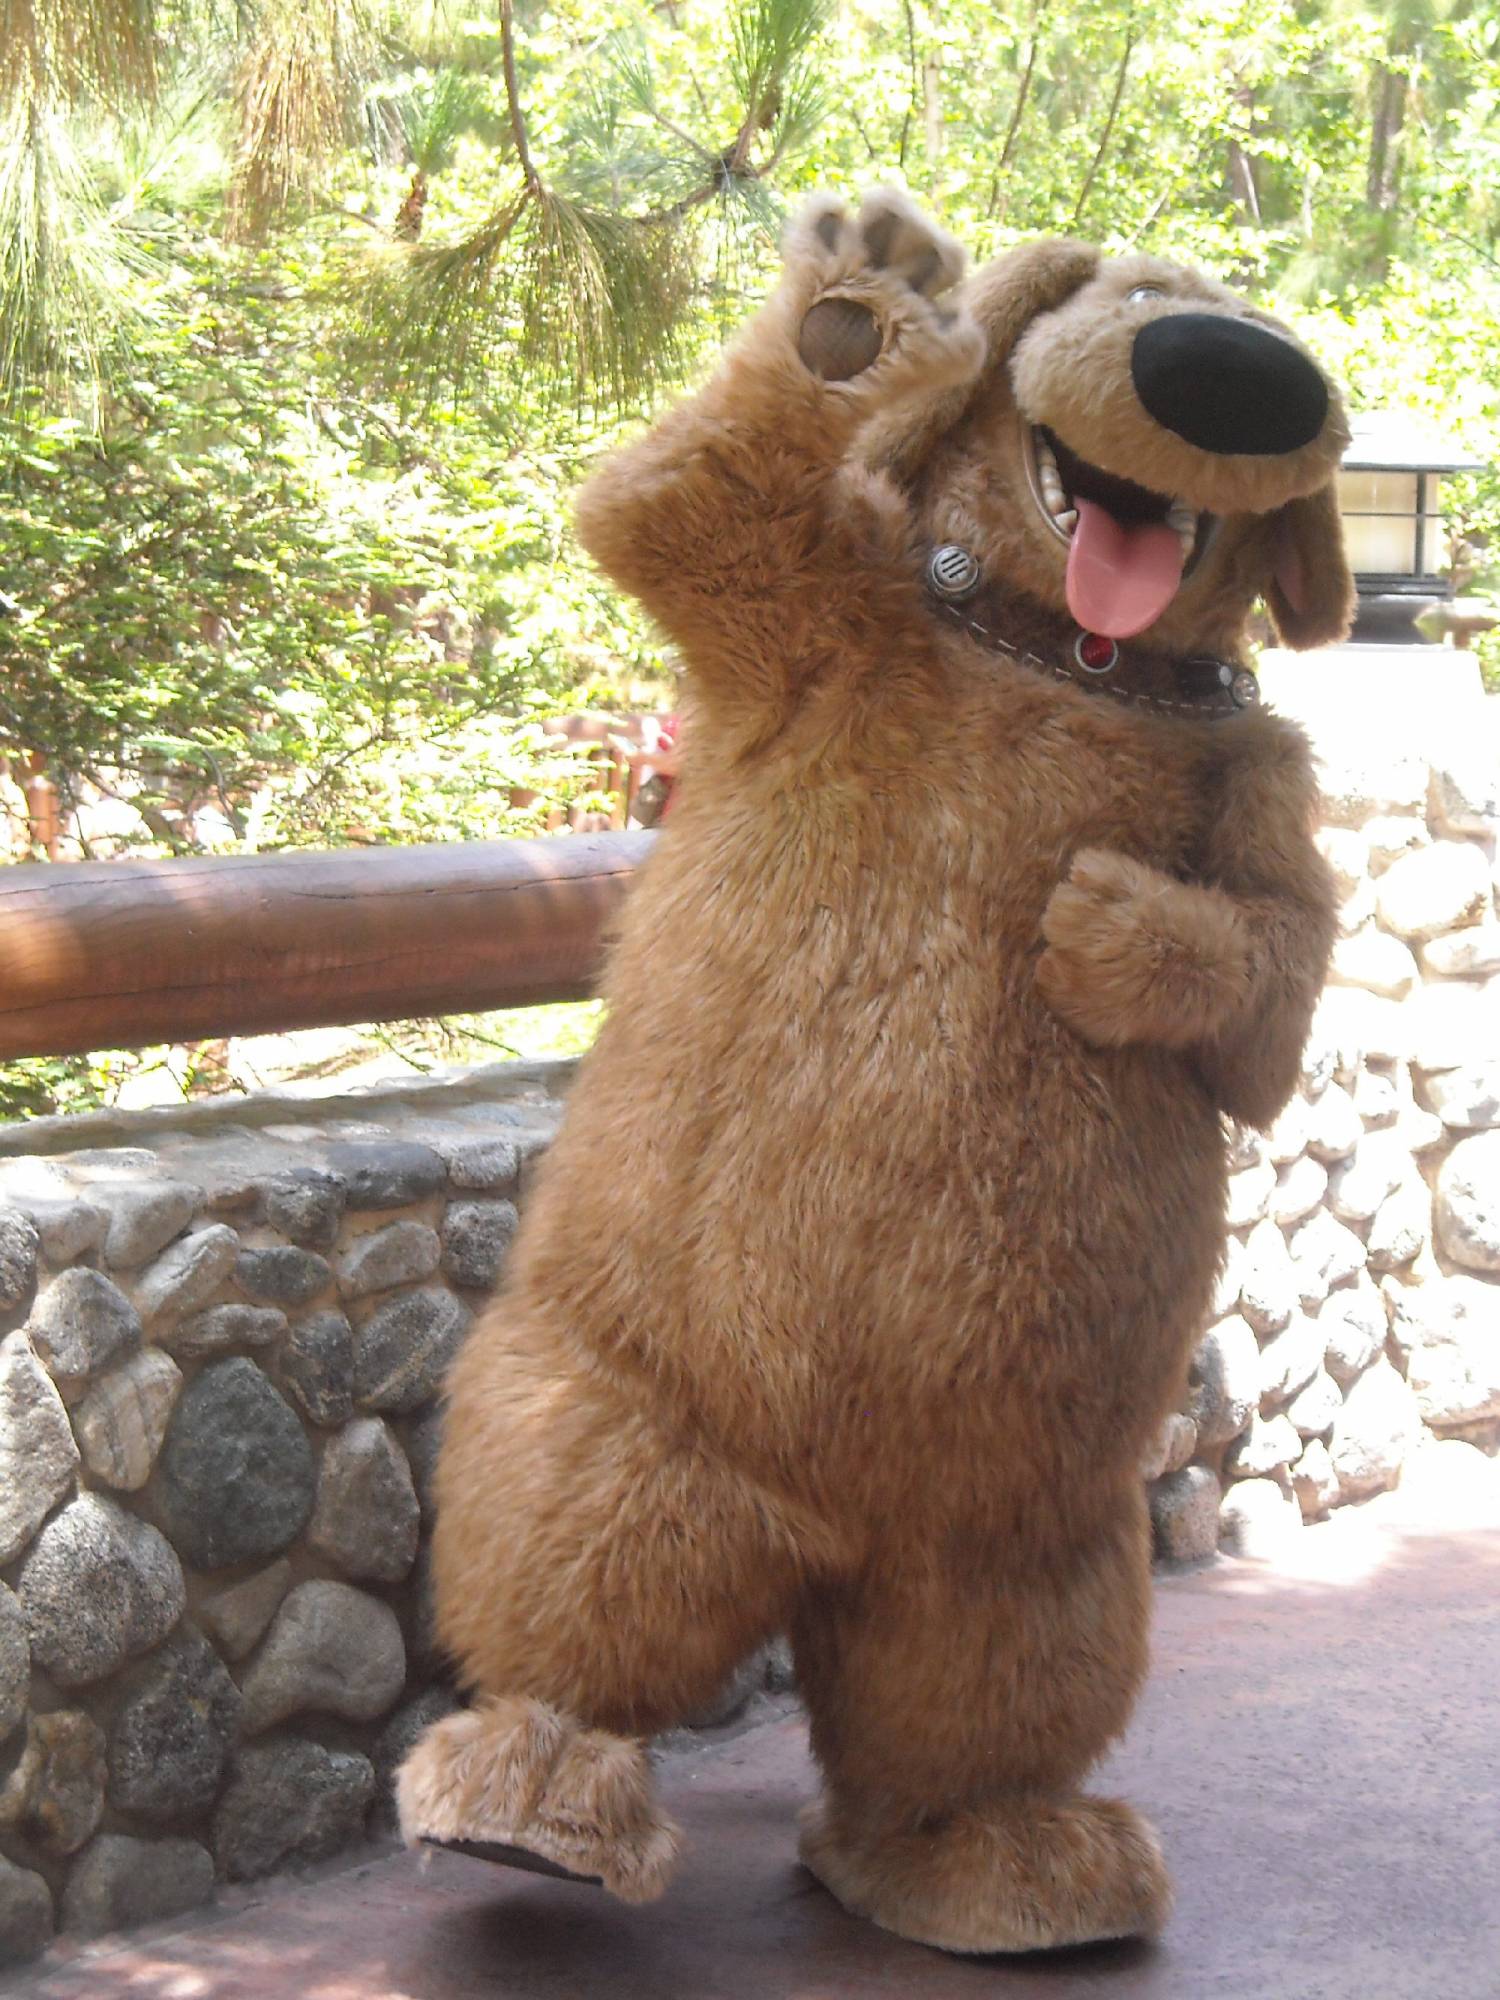 Explore the Redwood Creek Challenge at Disney California Adventure |PassPorter.com